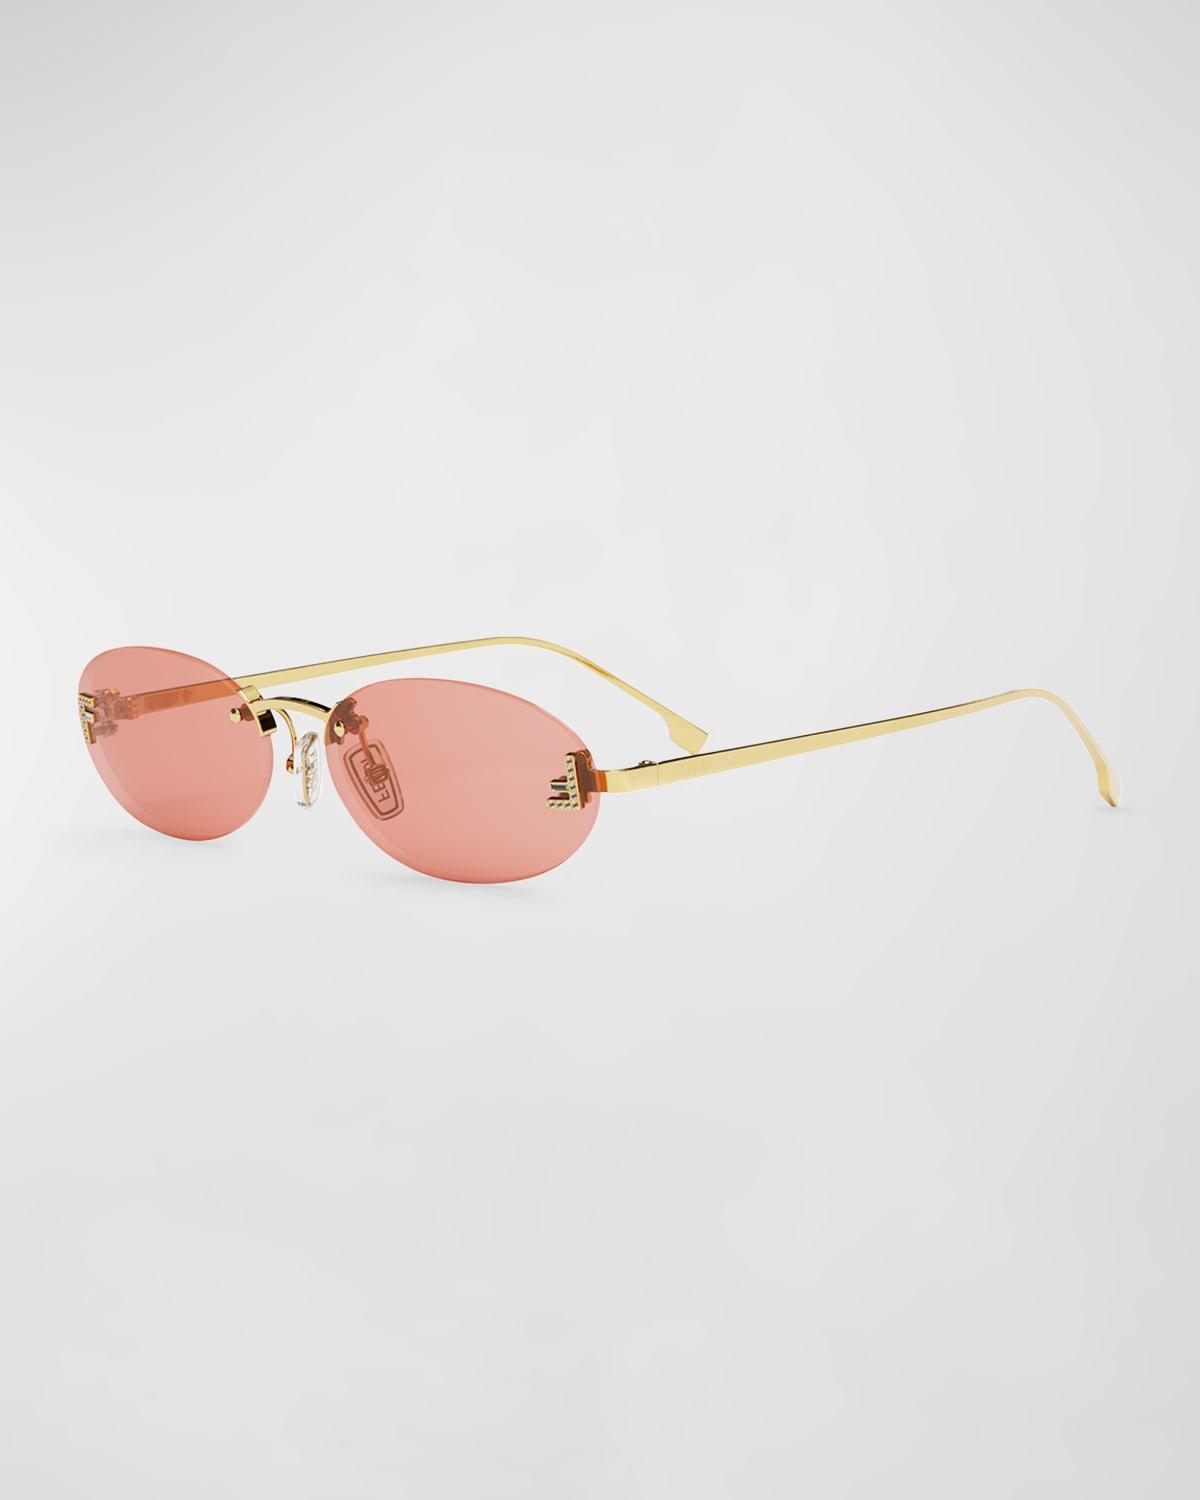 Fendi Embellished FF Oval Metal Sunglasses  - SHINY ENDURA GOLD Product Image